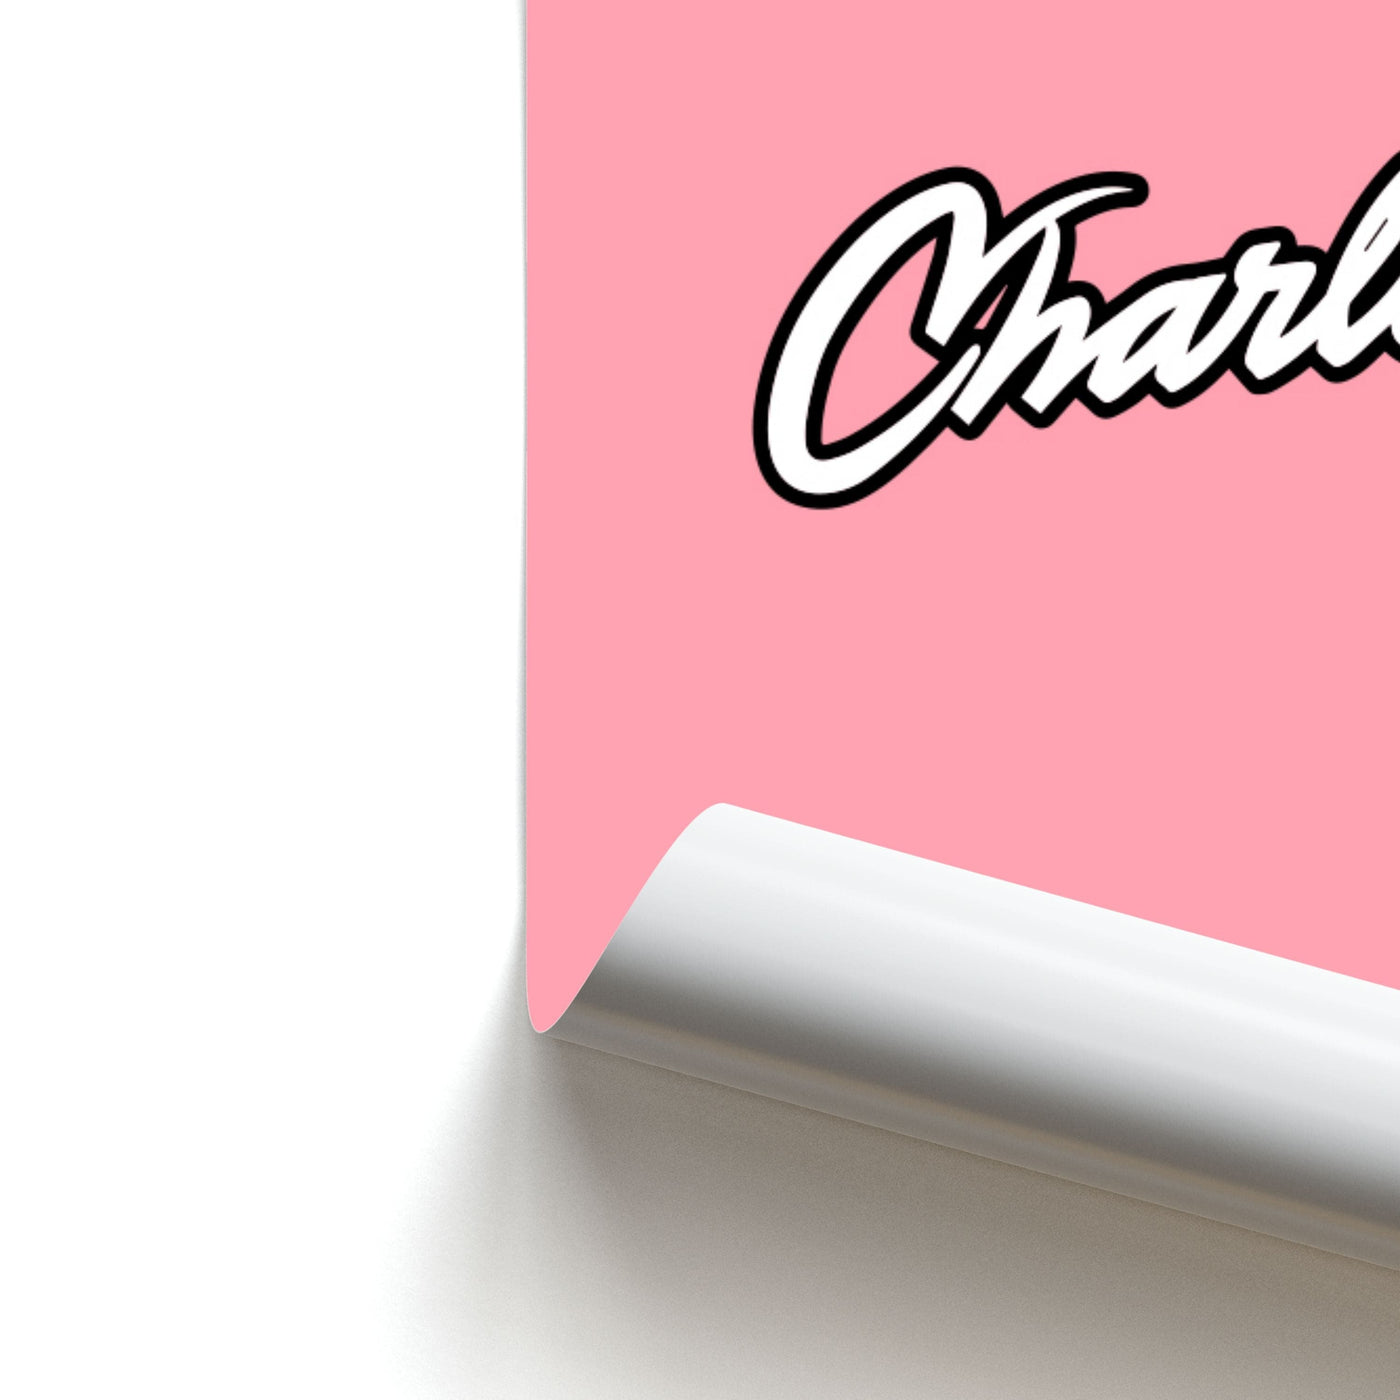 Charli Heart - Charlie D'Amelio Poster